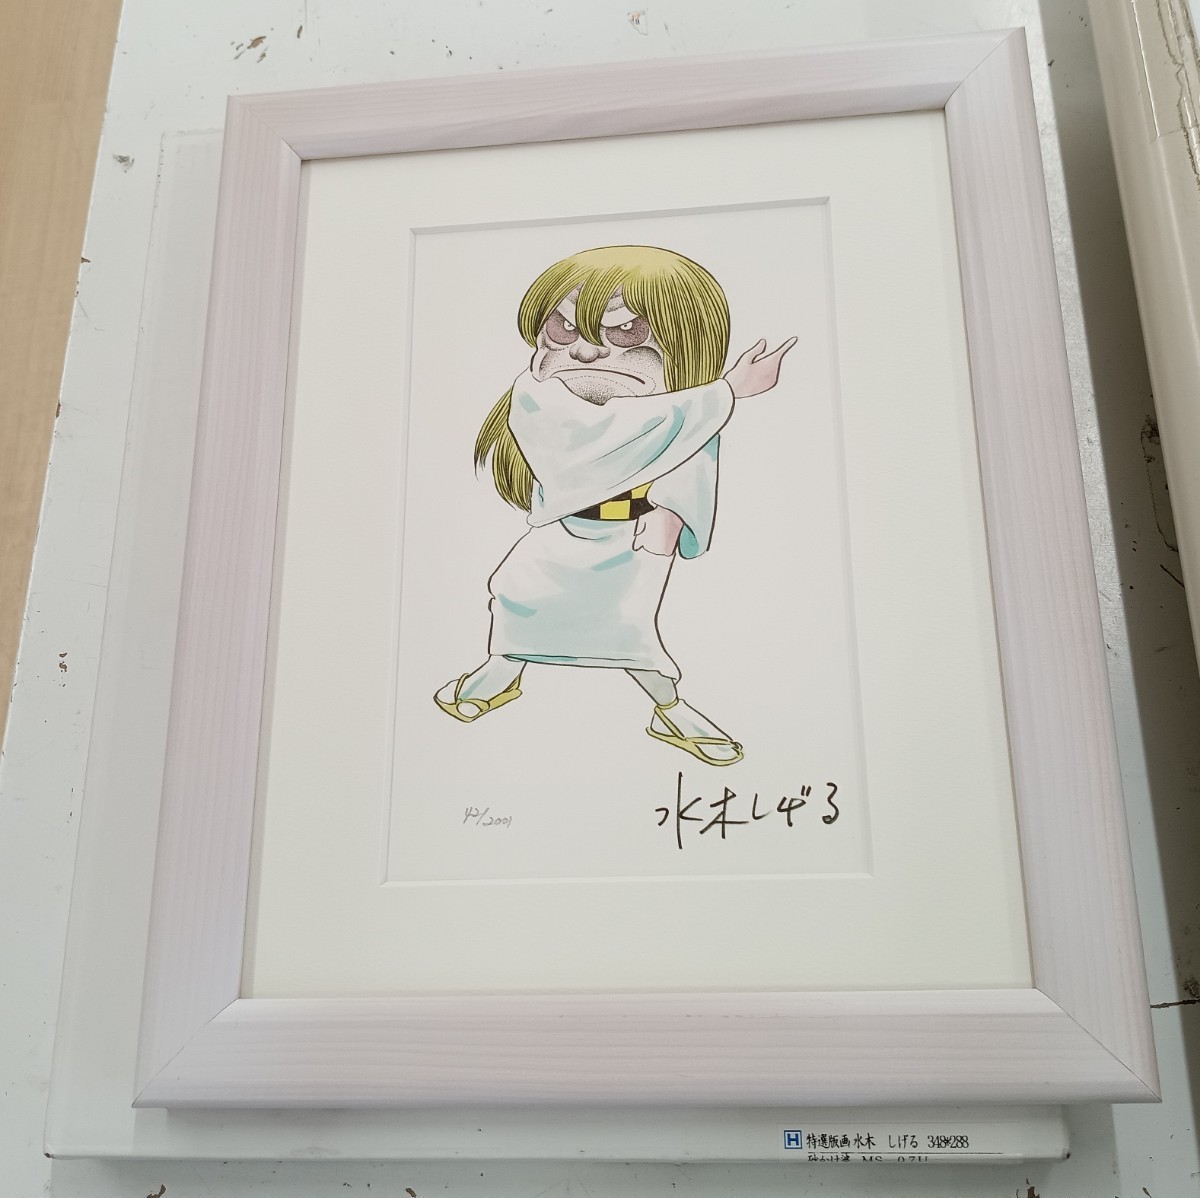 Authentique Shigeru Mizuki Sunakakeba GeGeGe no Kitaro Impression Peinture Encadrée Boîte extérieure incluse, ligne ka, GeGeGe pas Kitaro, autres